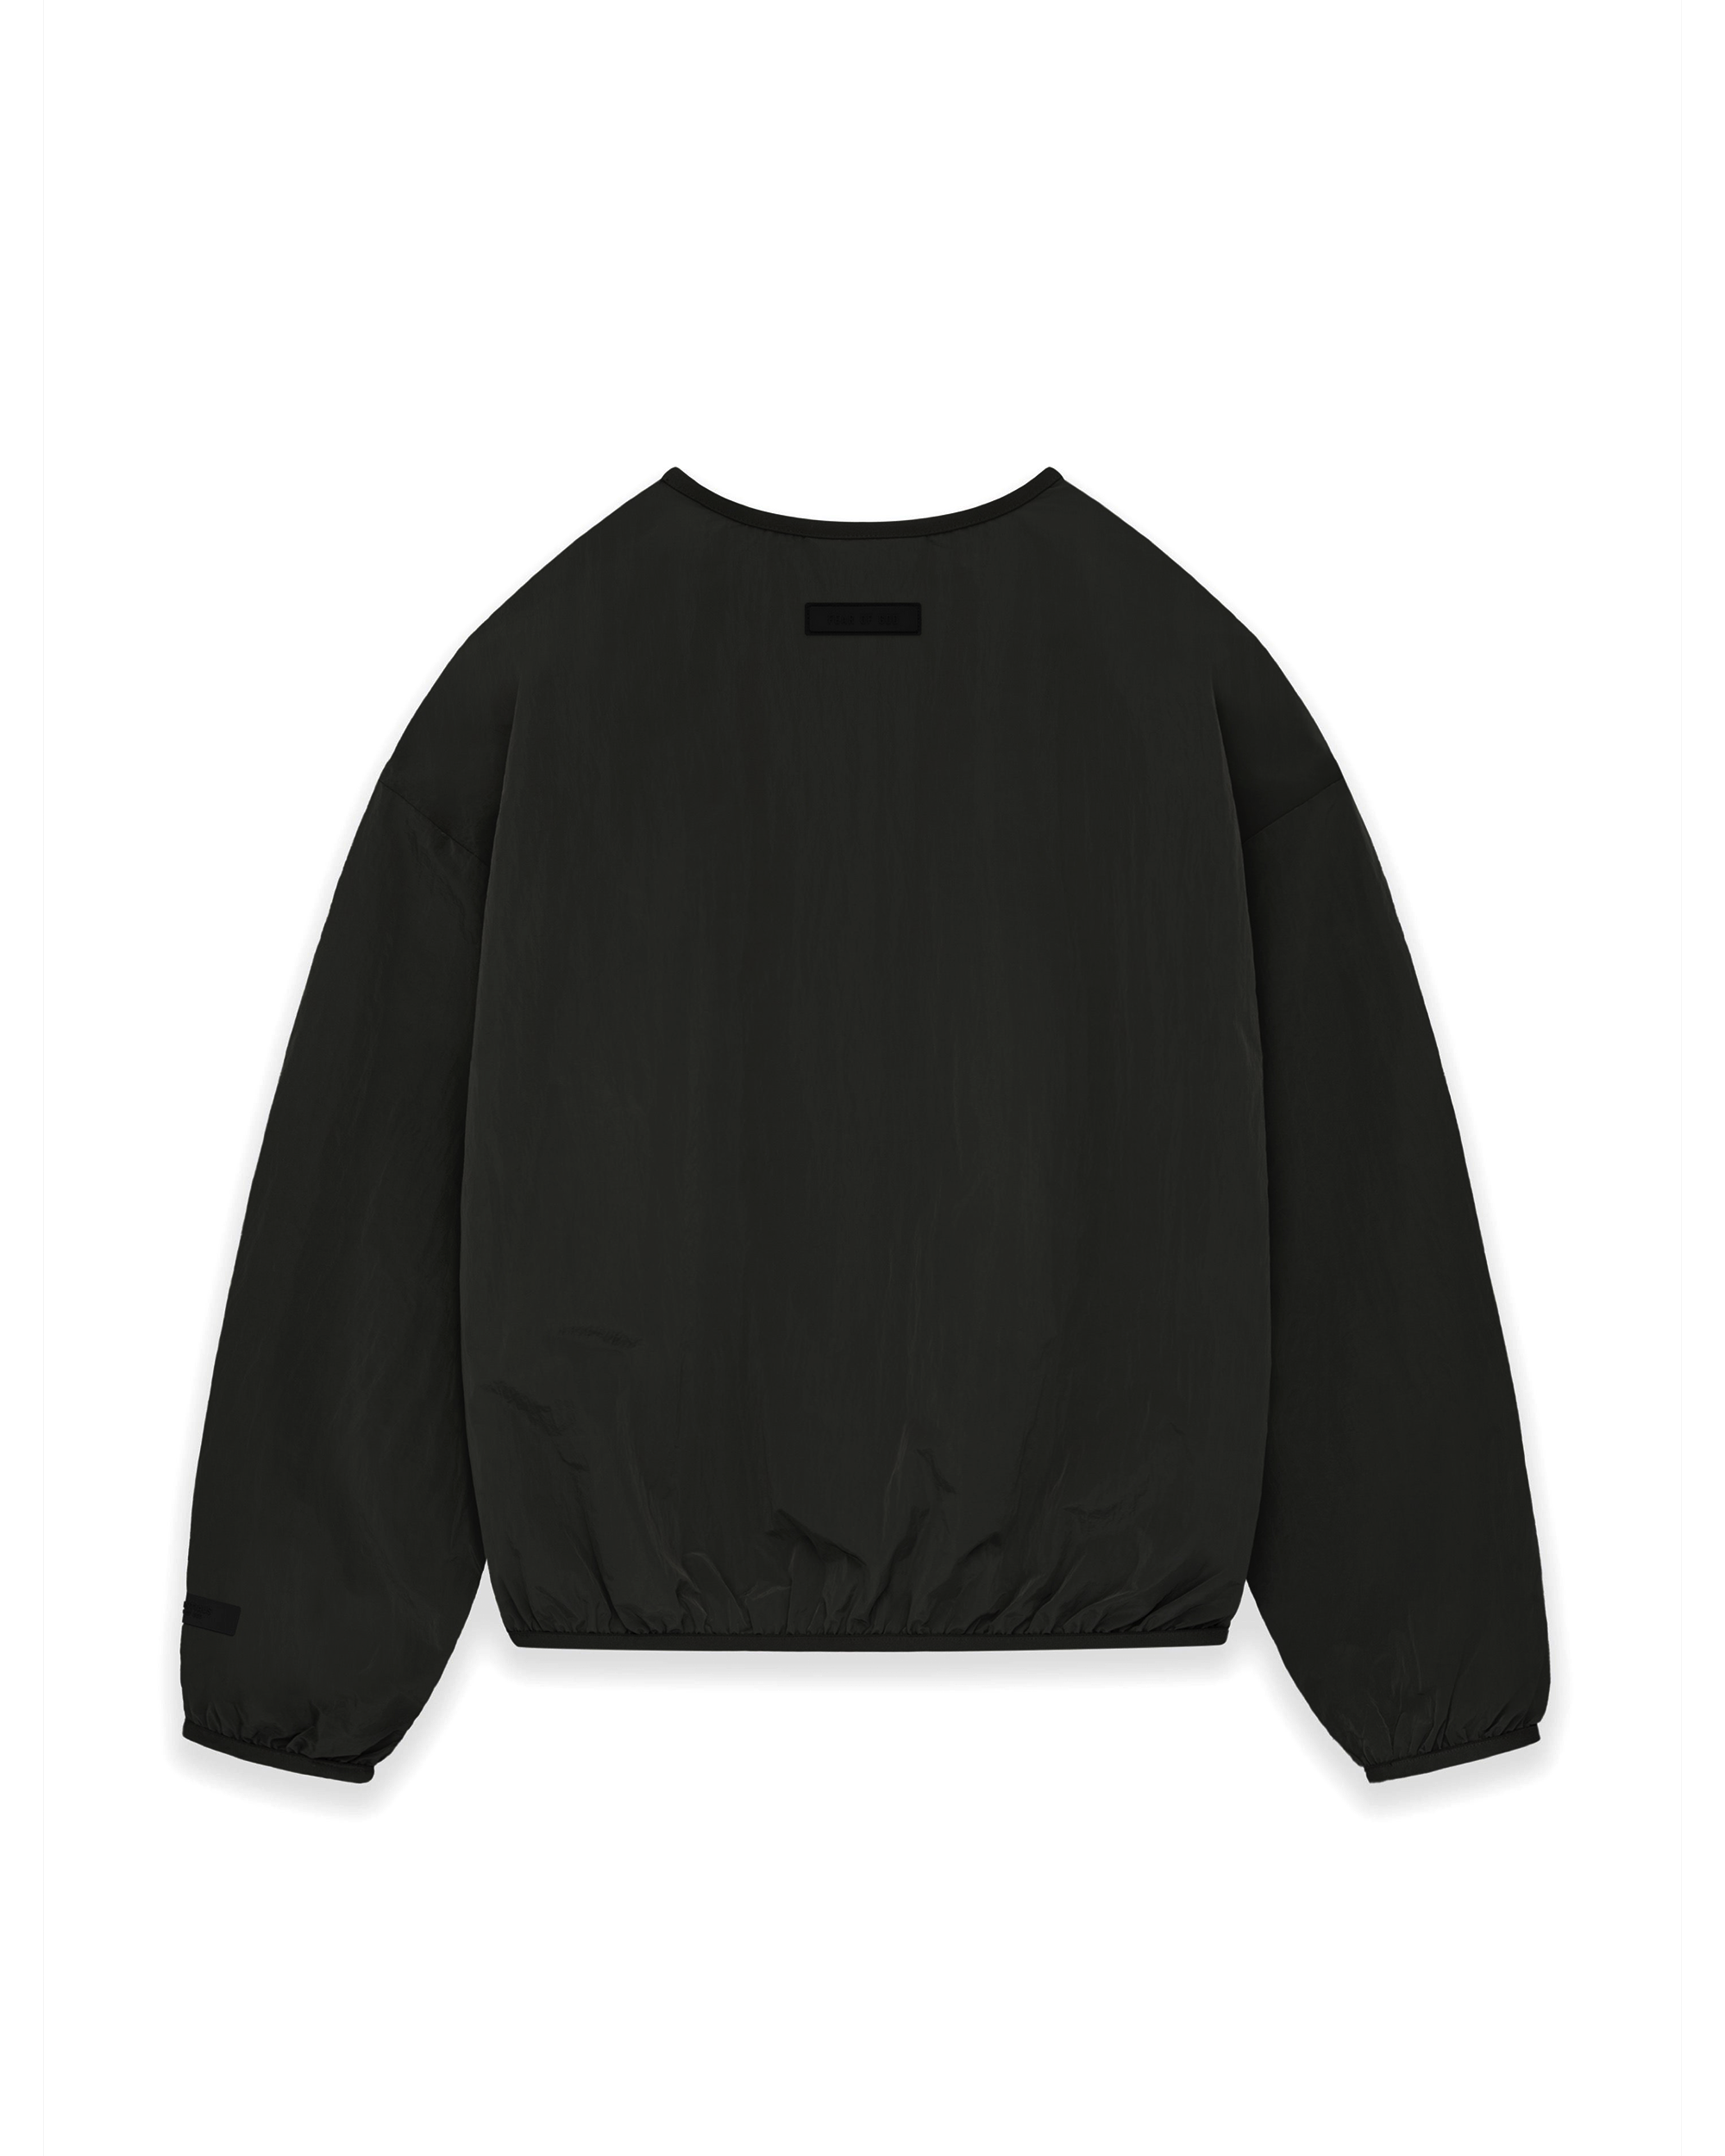 Crinkle Nylon Sweater - Jet Black